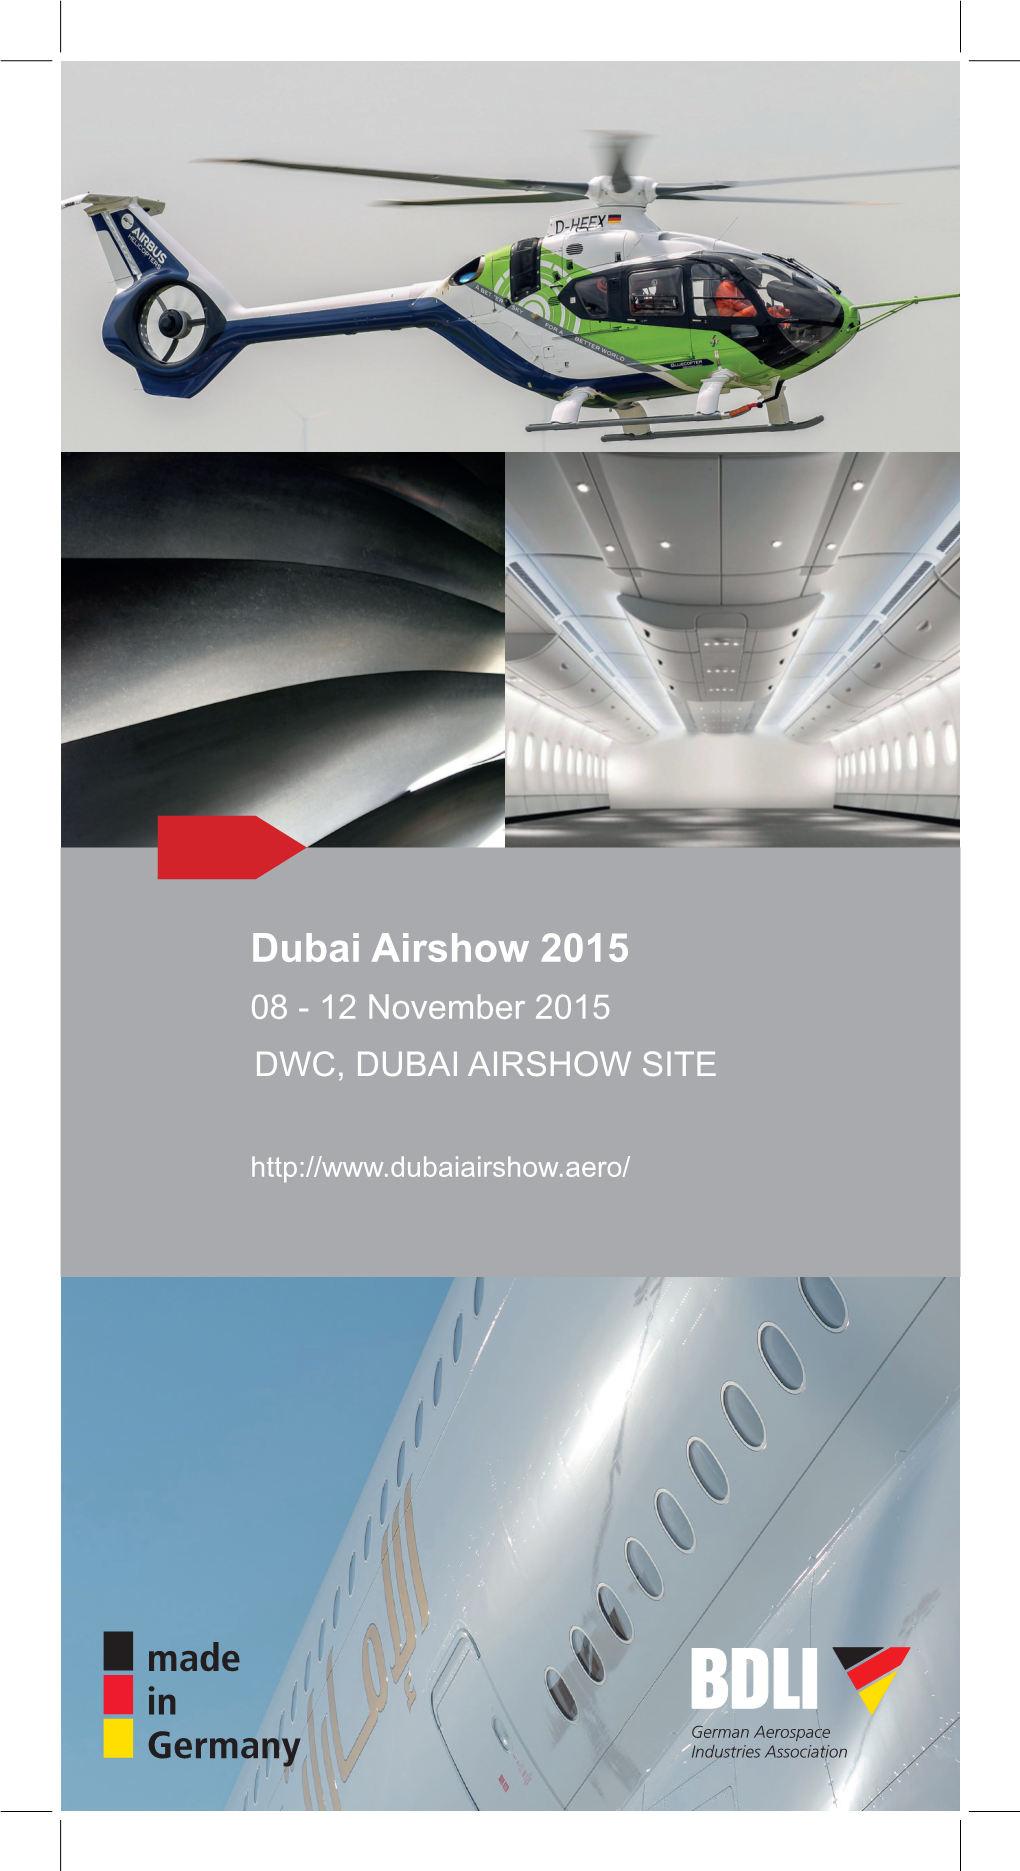 Singapore Airshow 2014 Dubai Airshow 2015